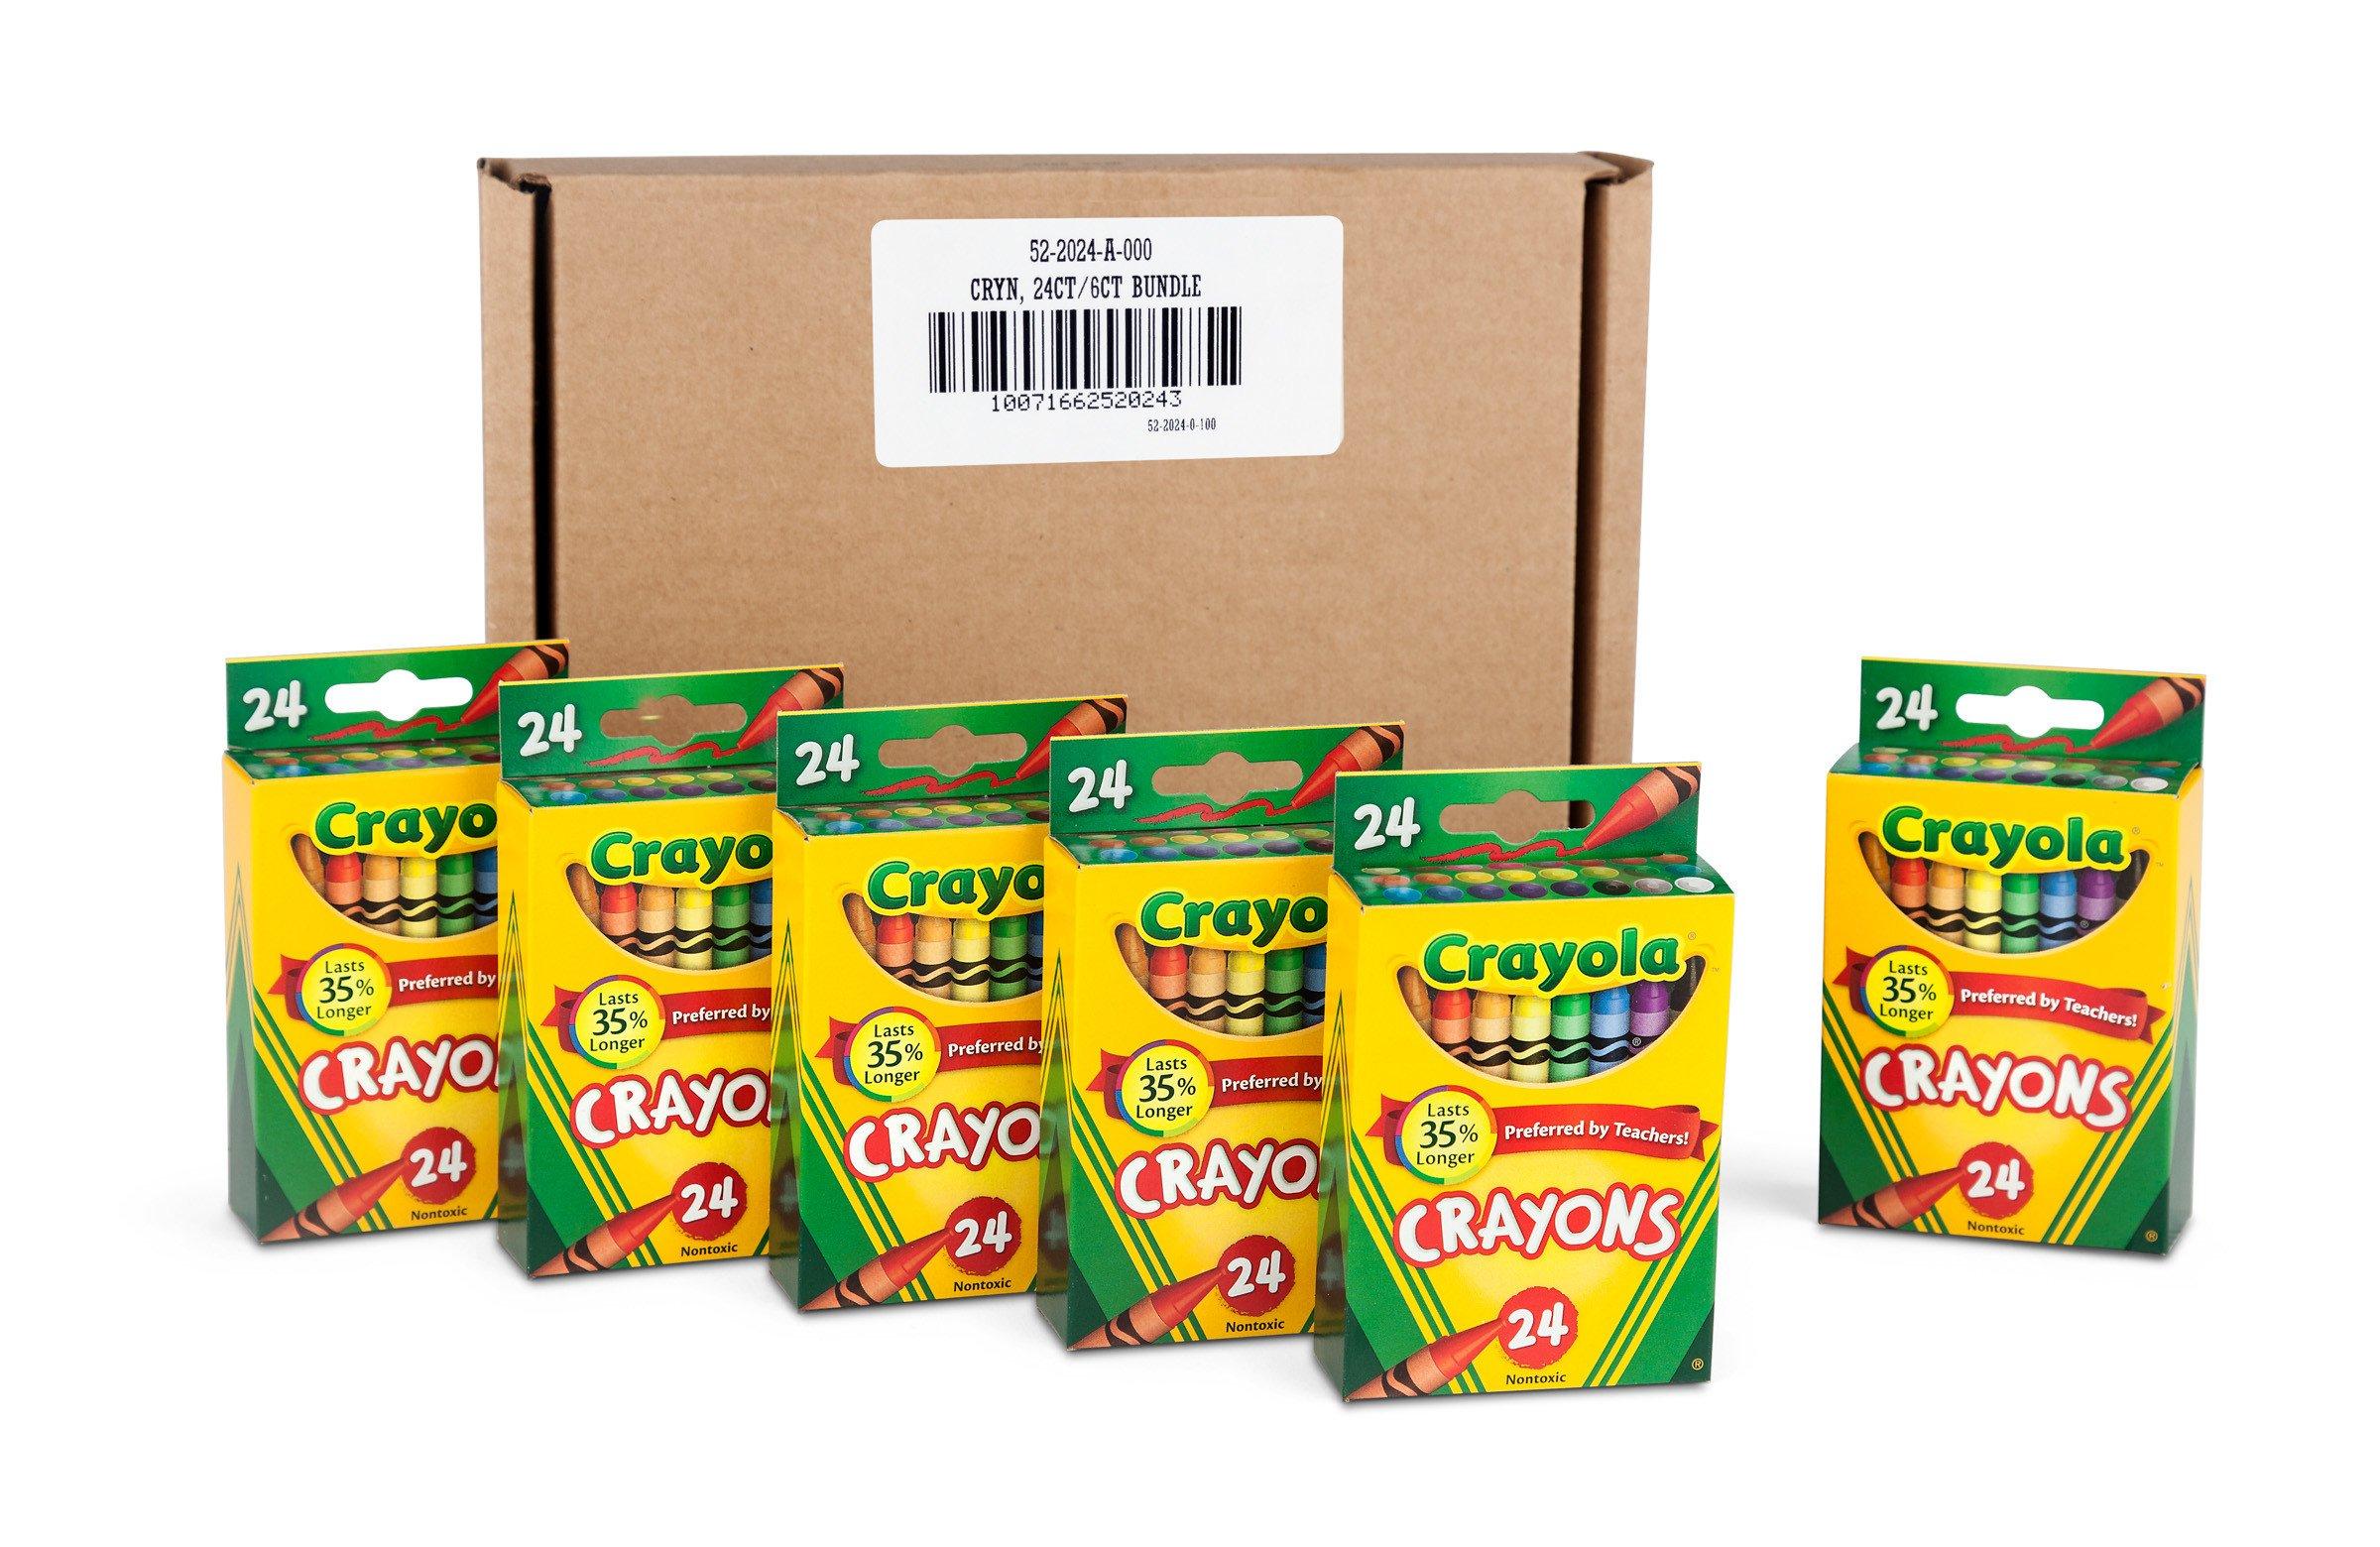 Crayola Crayons 24 ct (Pack of 2)